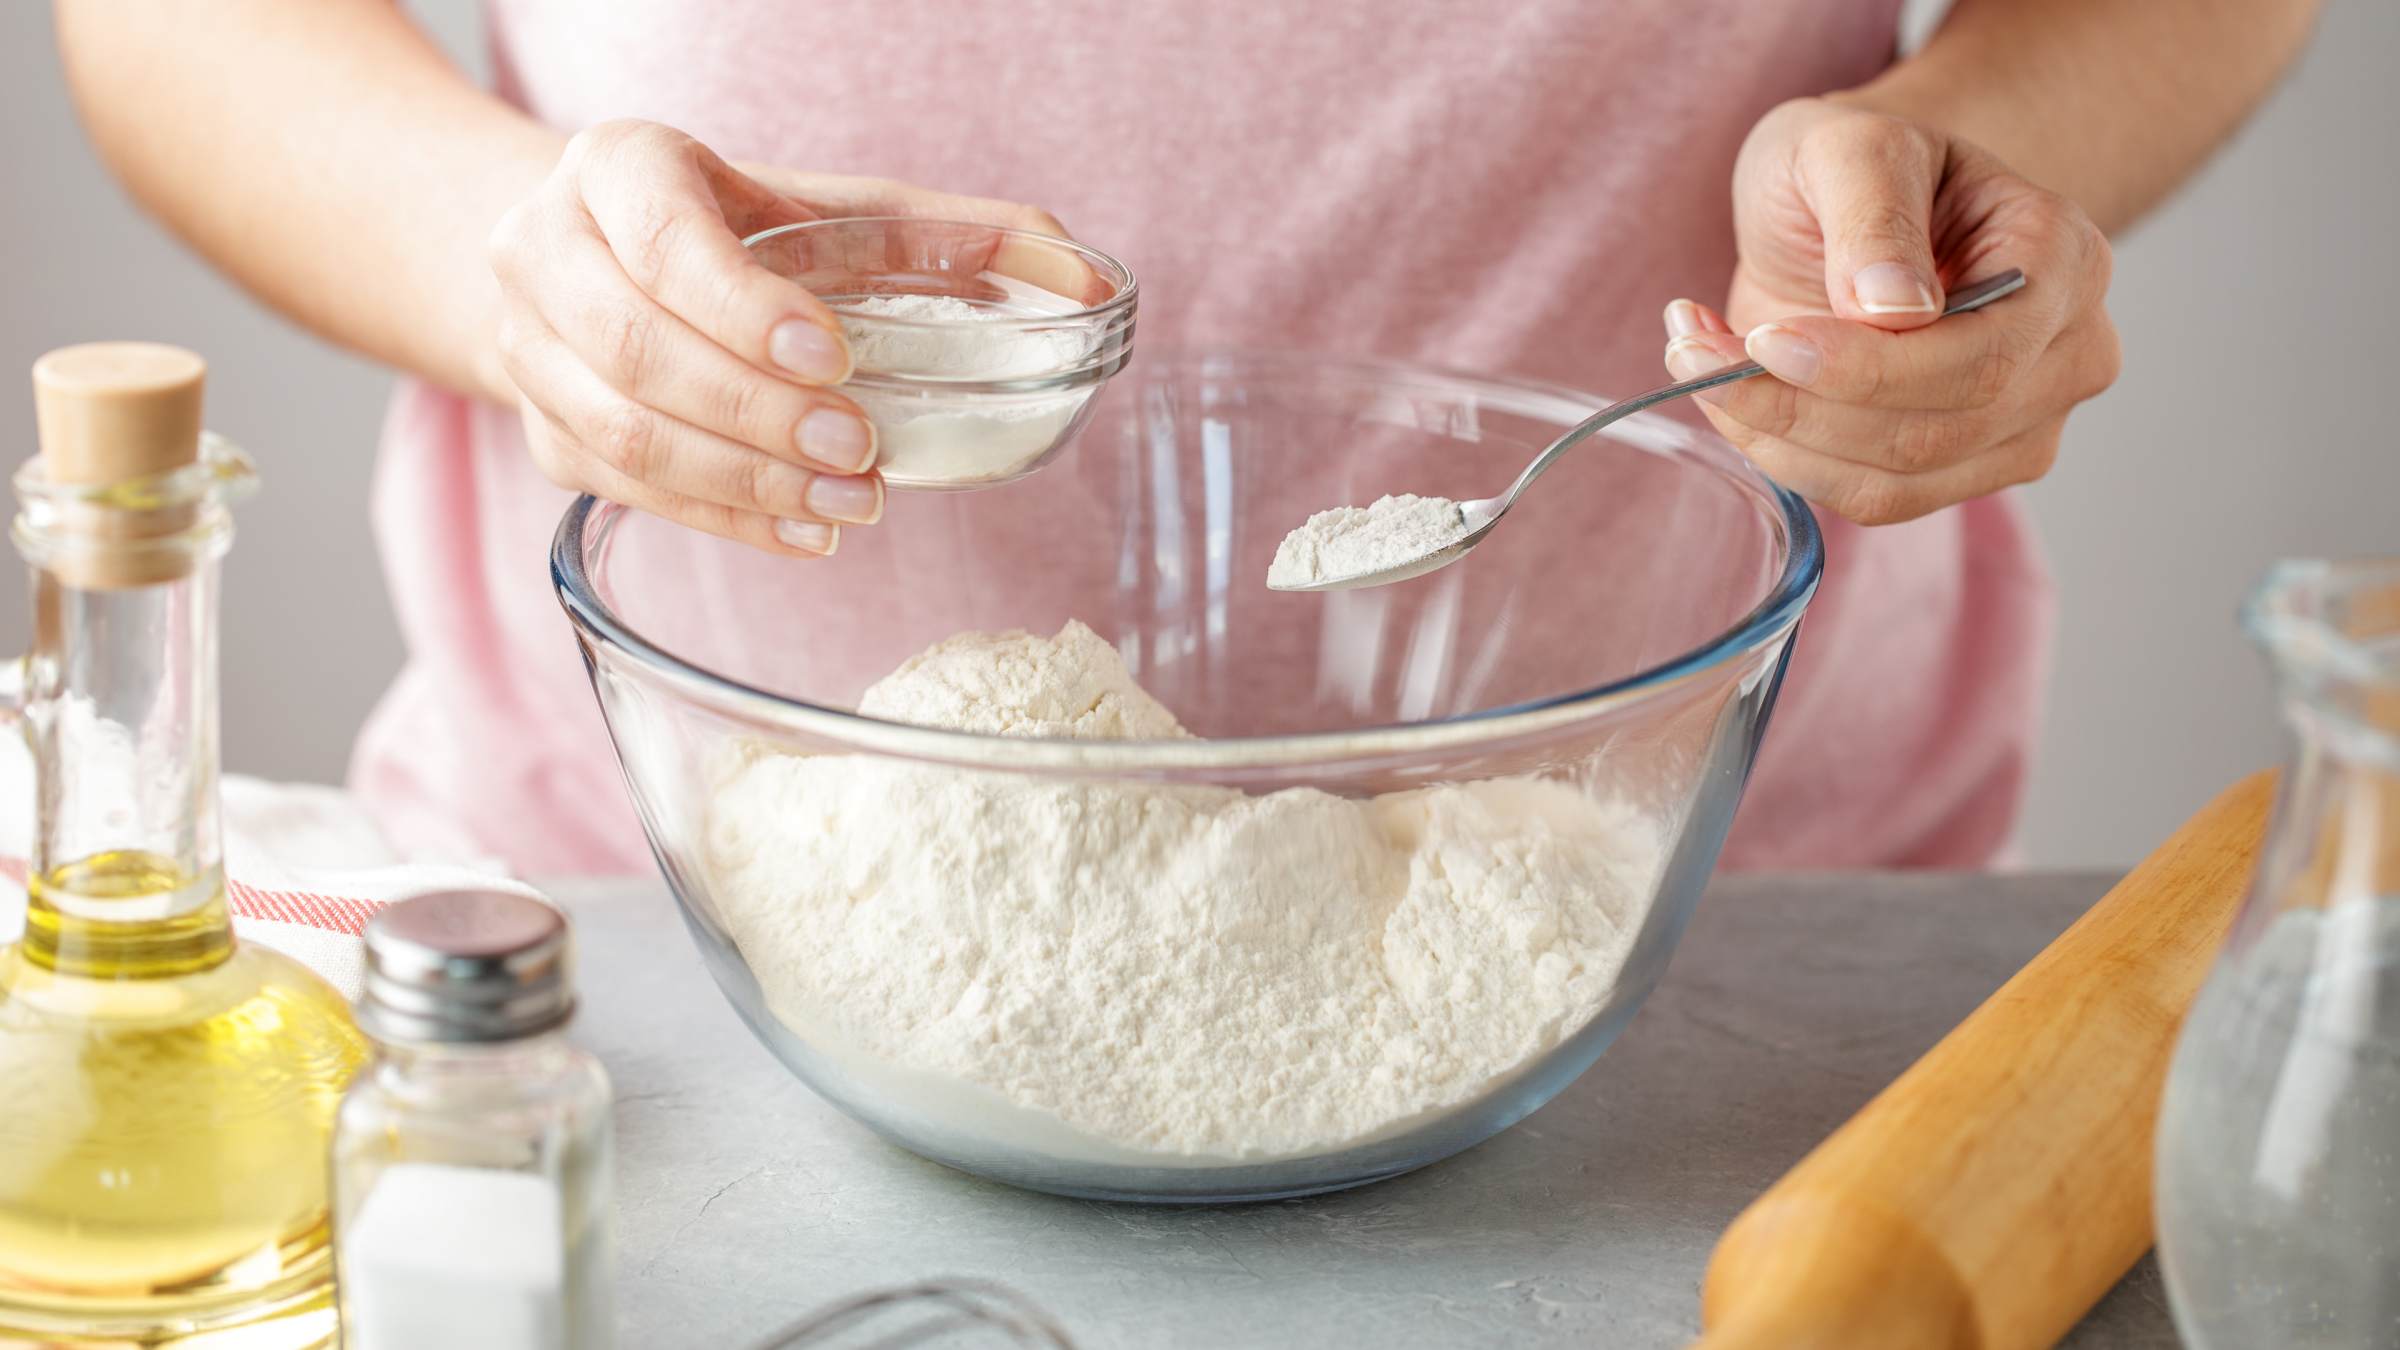 What is baking powder